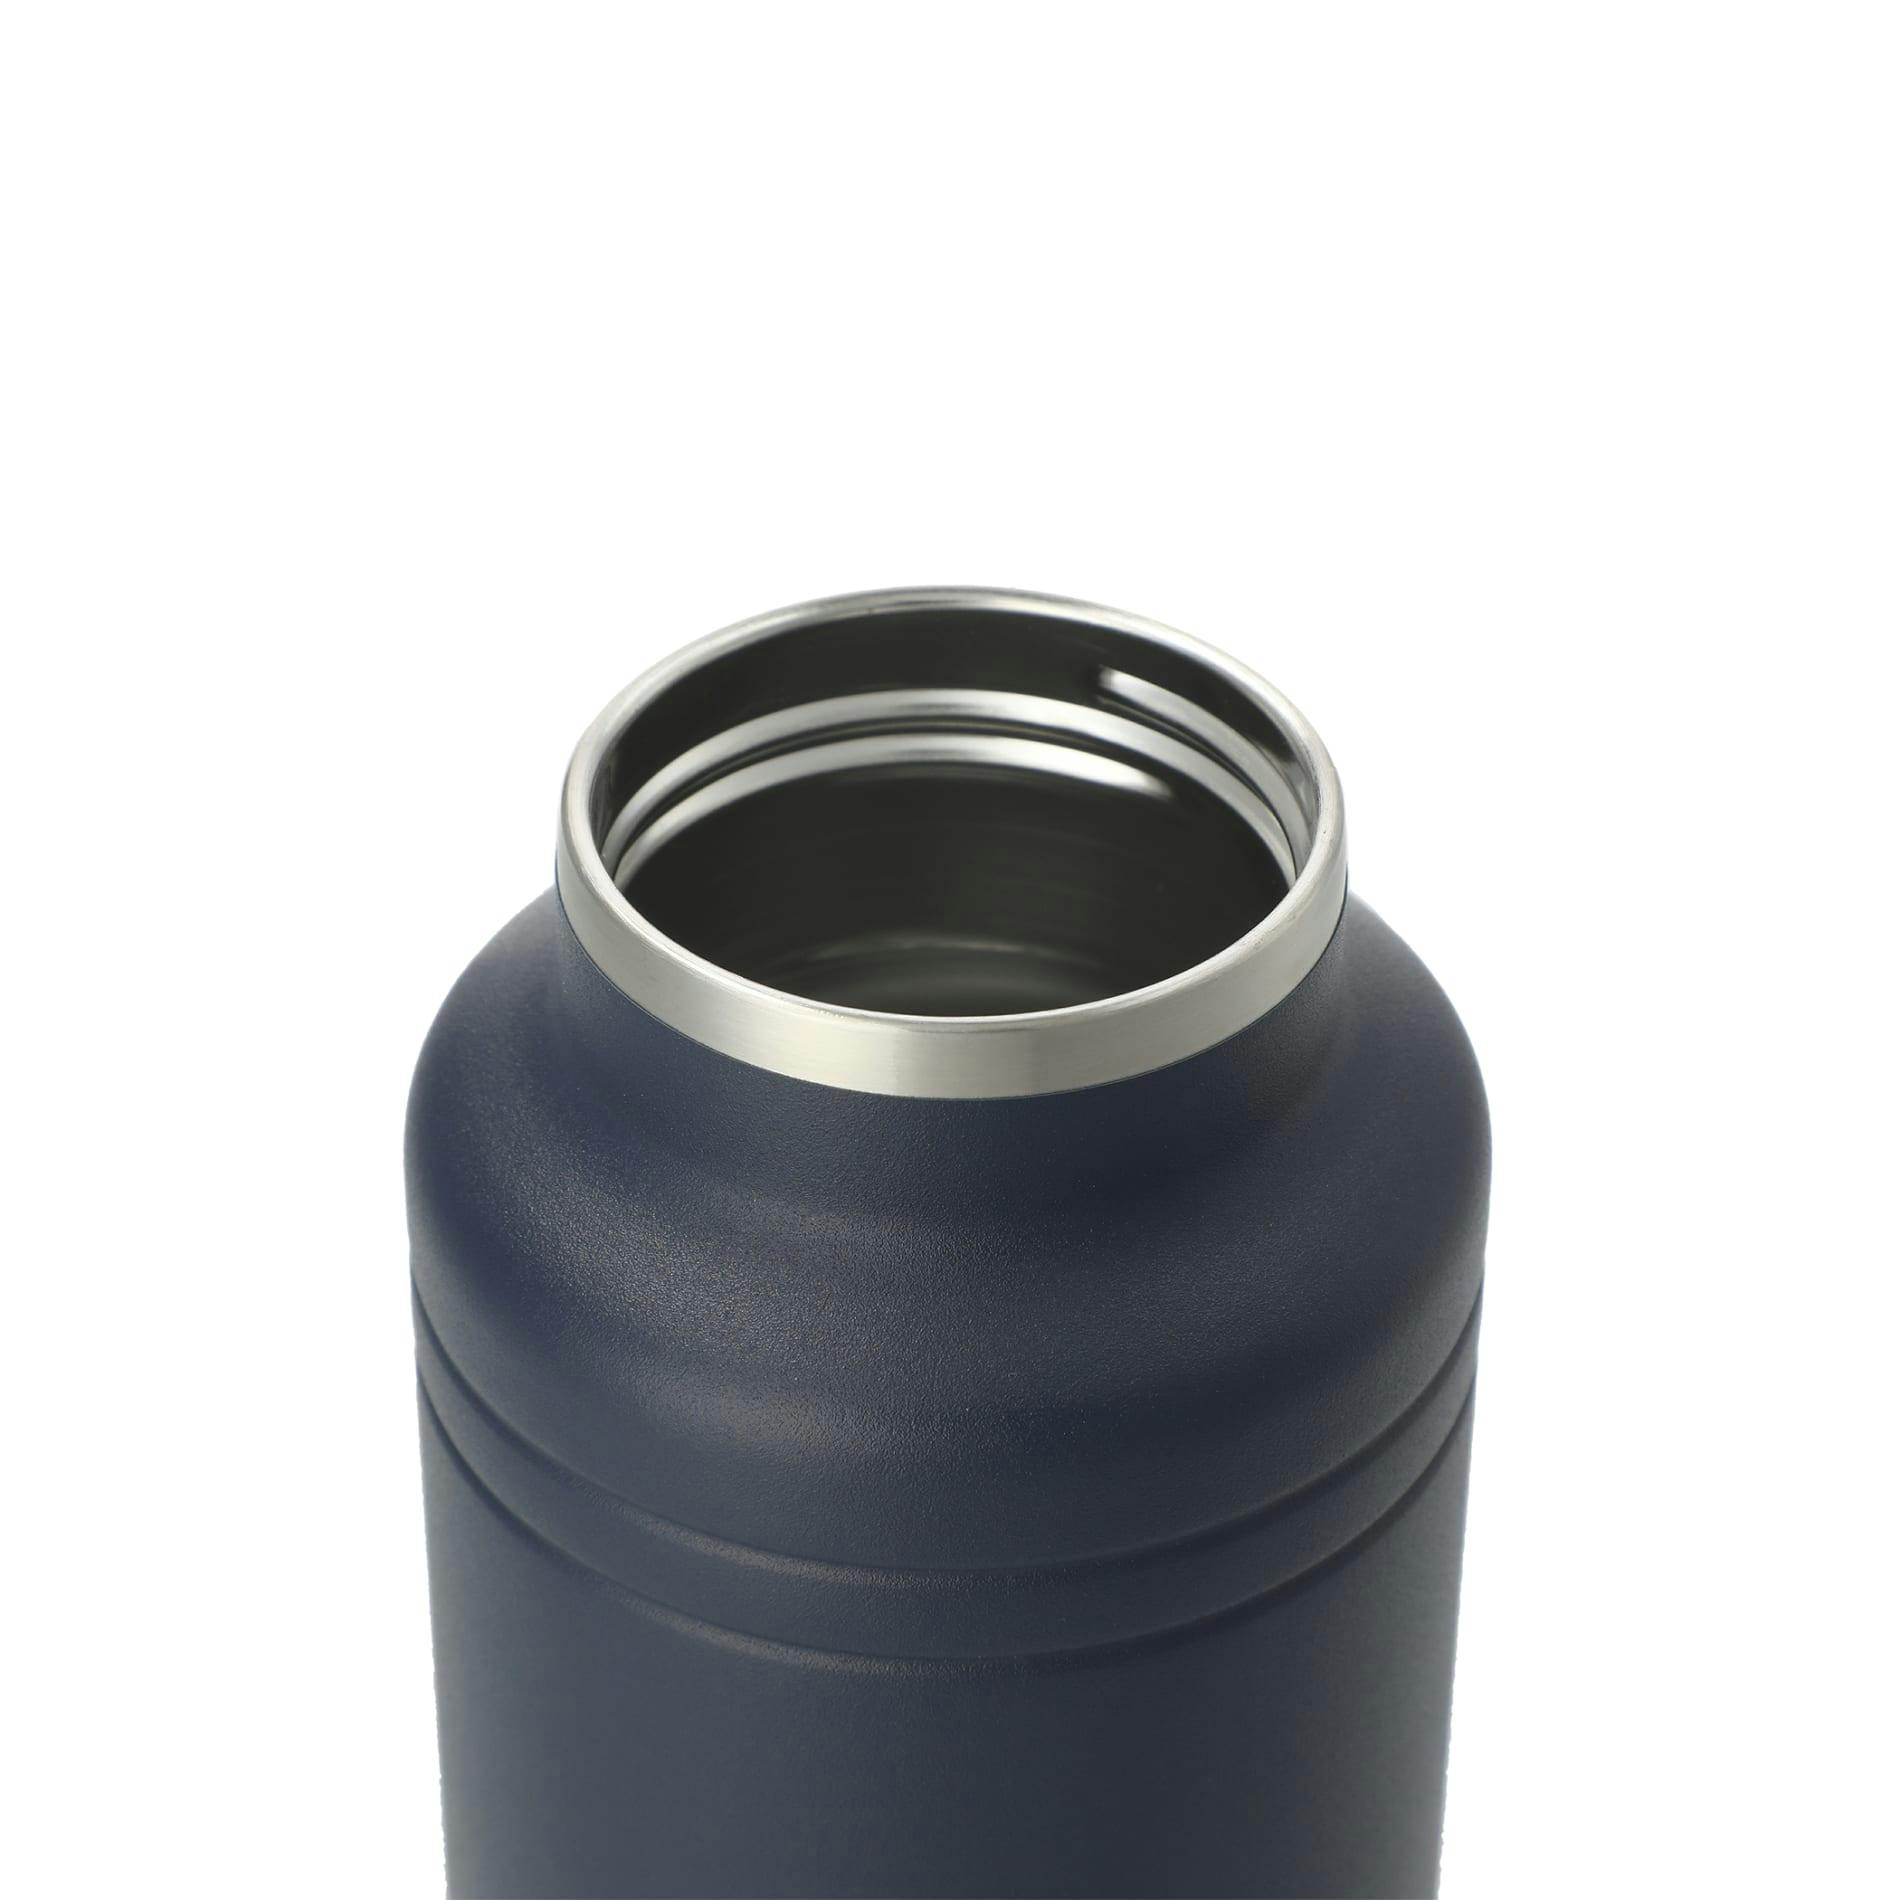 Custom Arctic Zone 20 oz. Copper Vacuum Insulated Water Bottle - Design Water  Bottles Online at